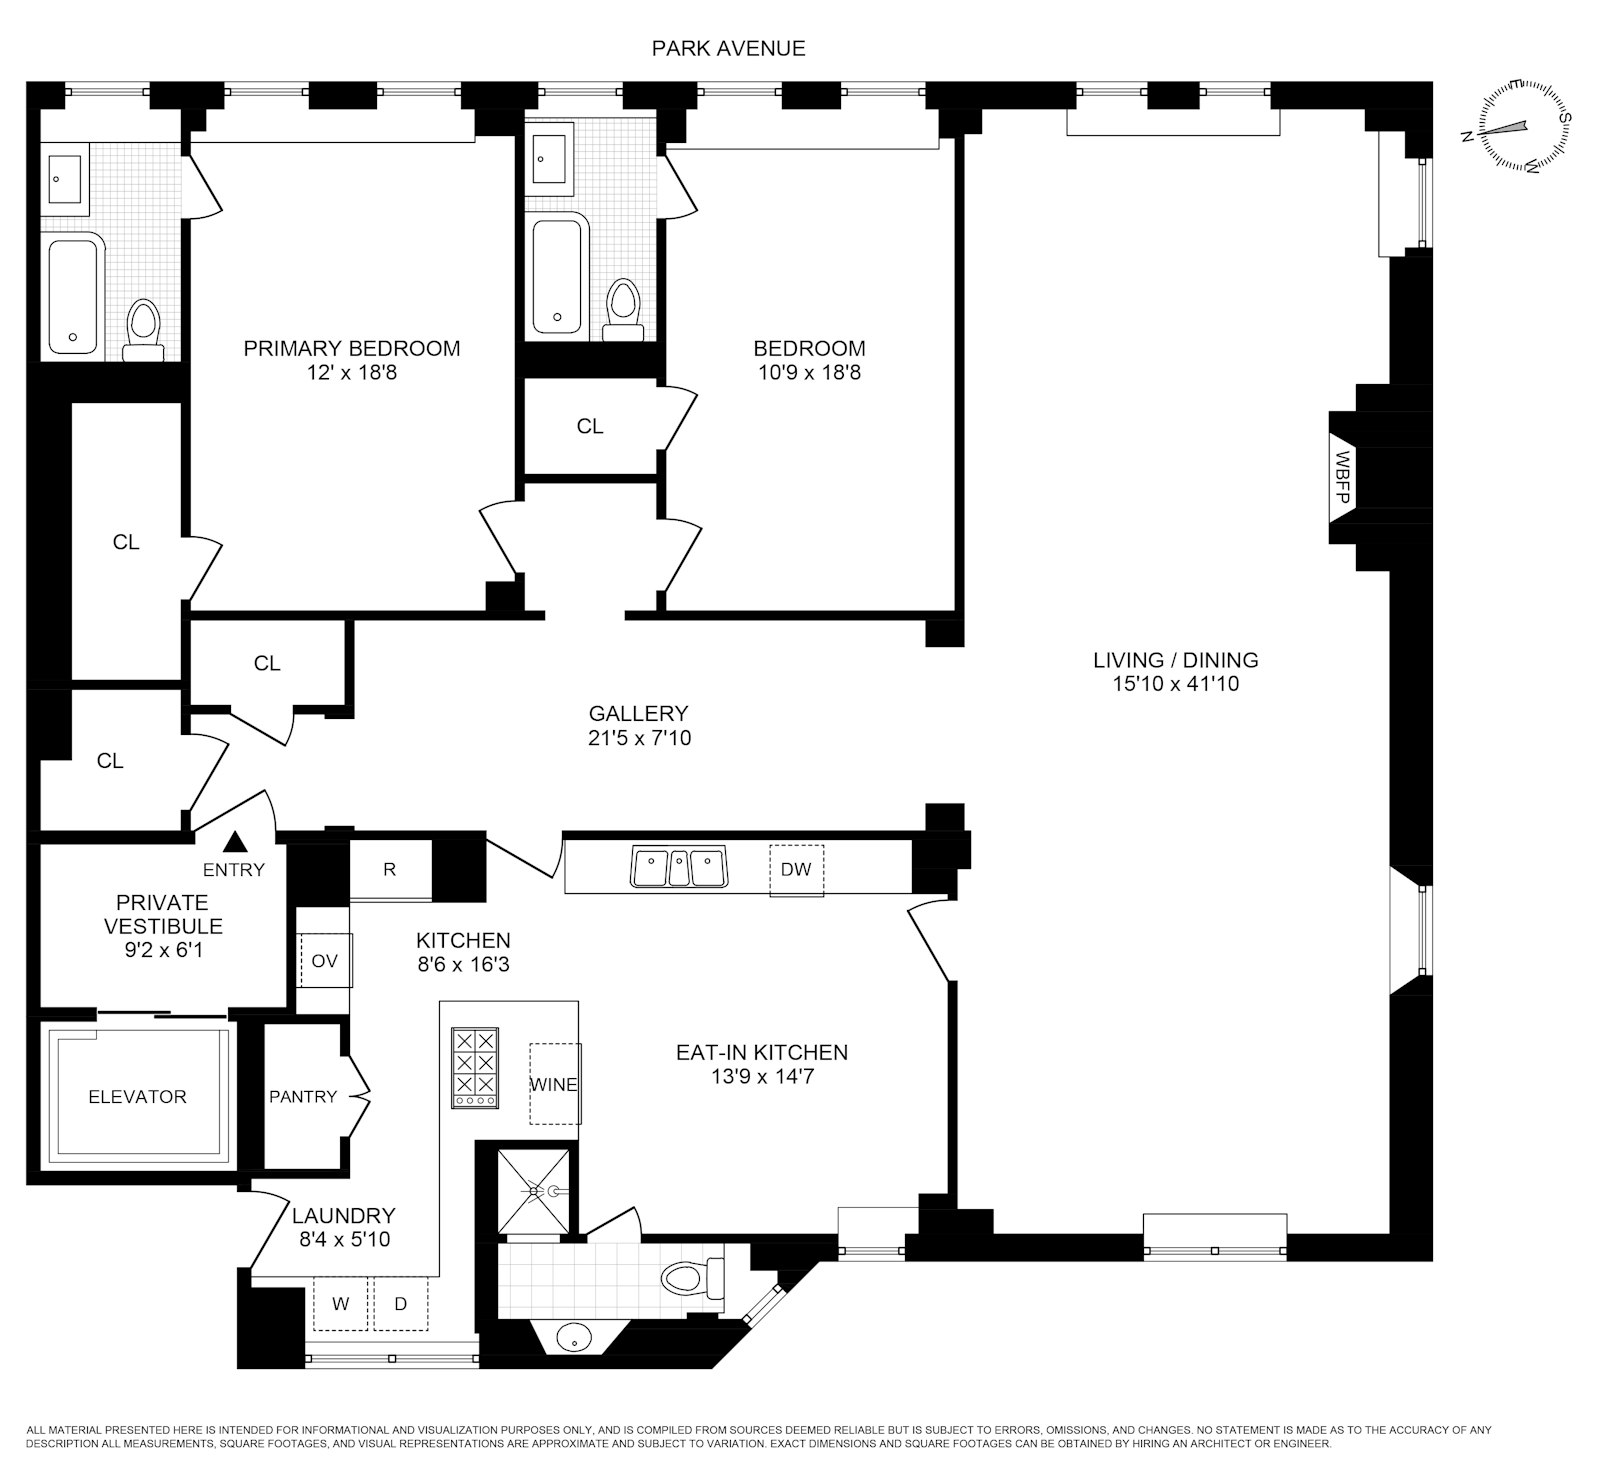 Floorplan for 784 Park Avenue, 15A